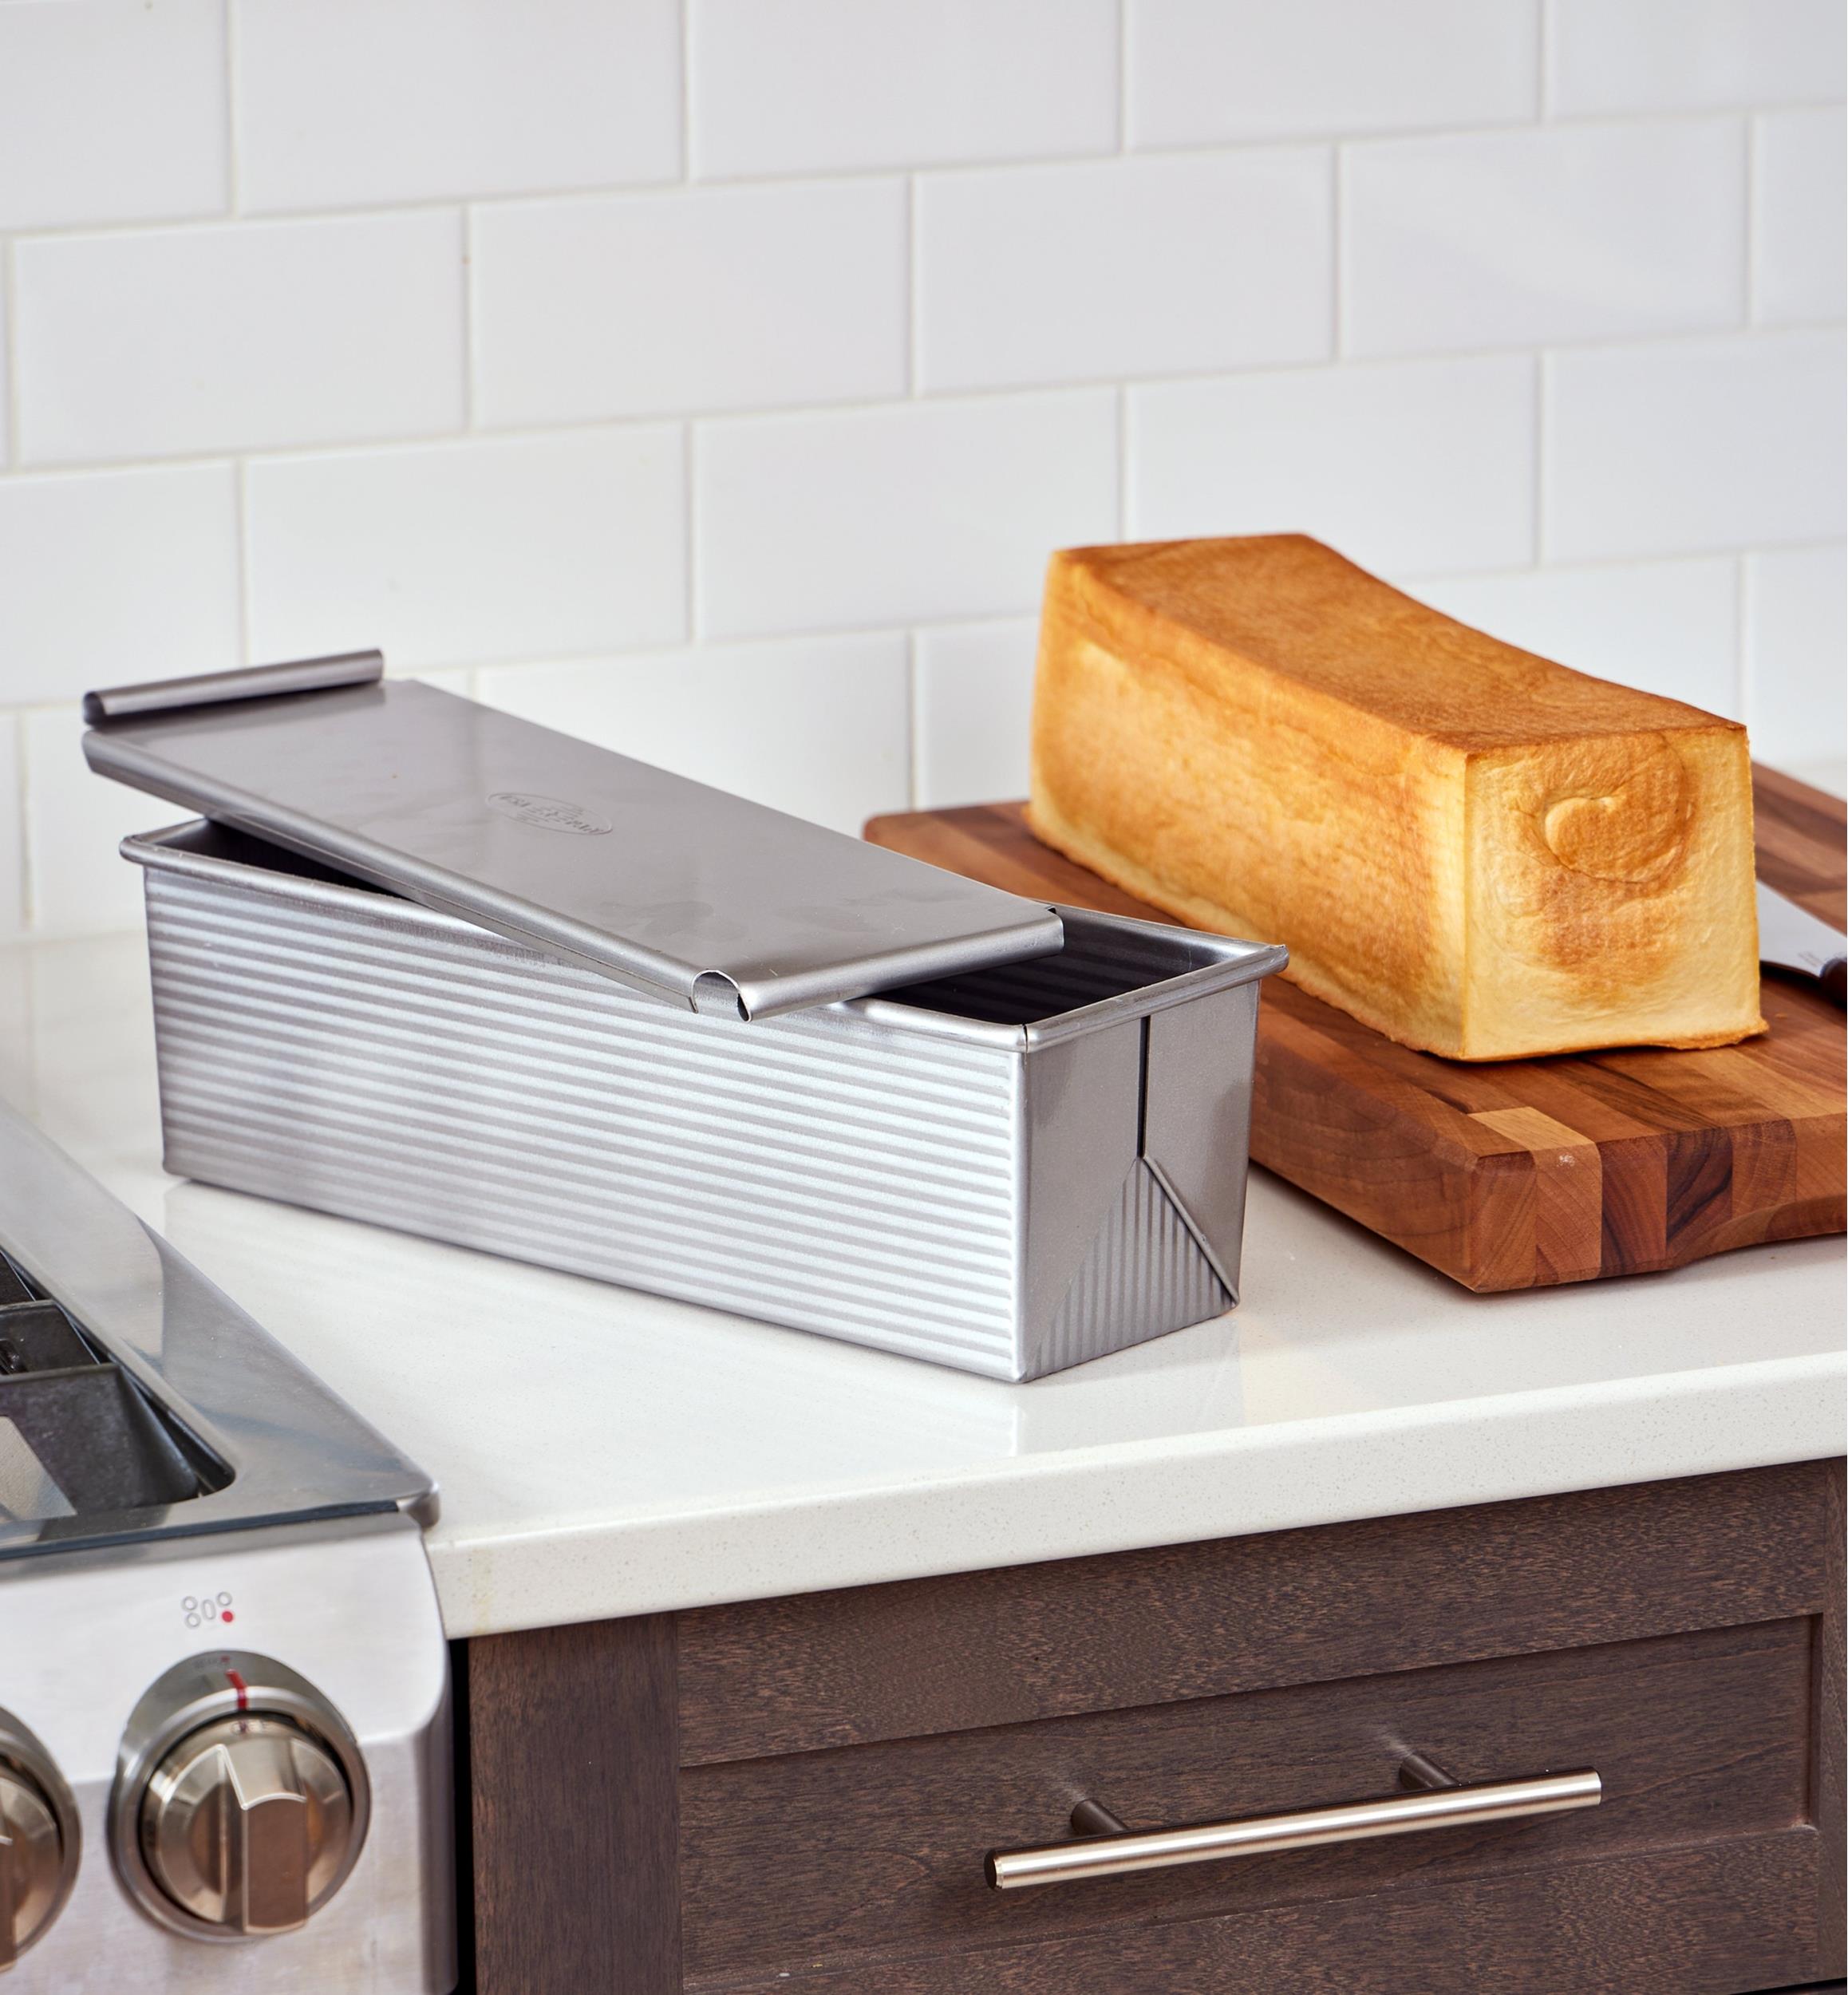 USA Pan usa pan bakeware pullman loaf pan with cover, 13 x 4 inch